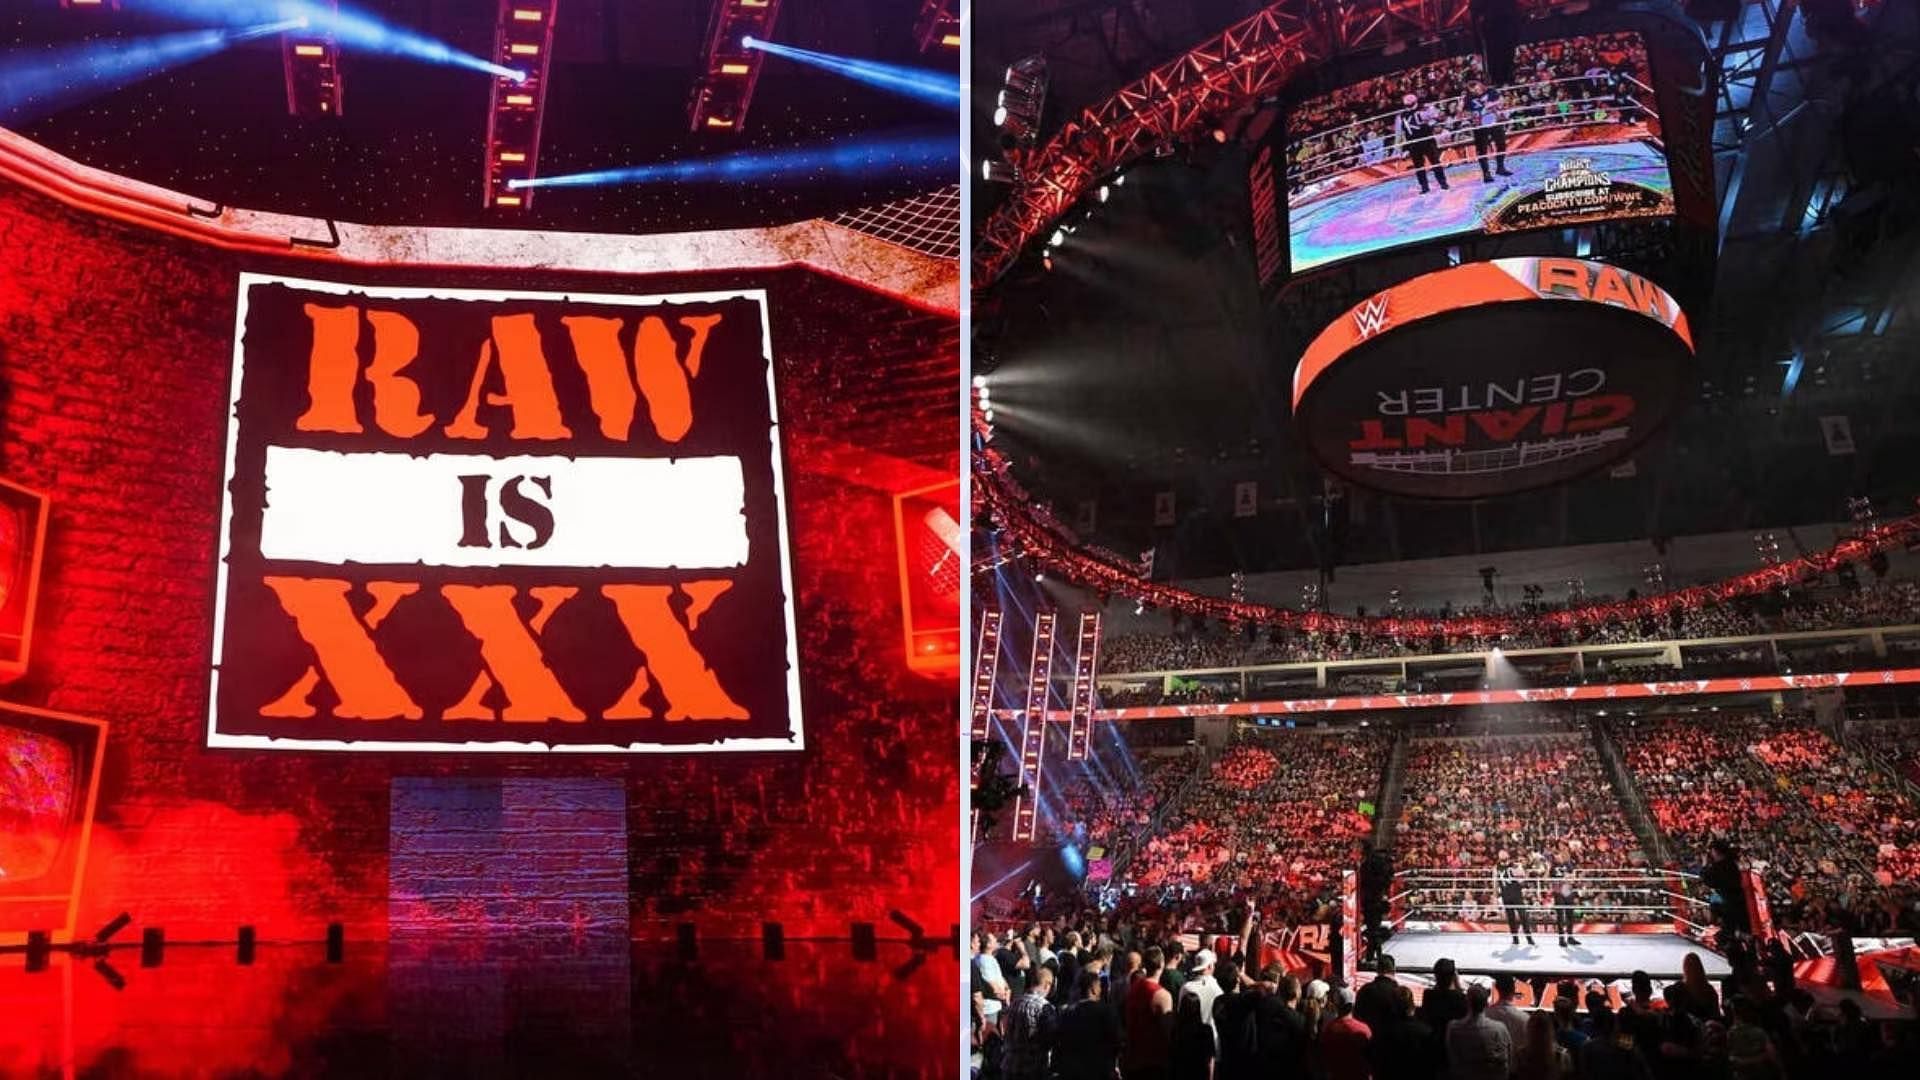 WWE RAW arena